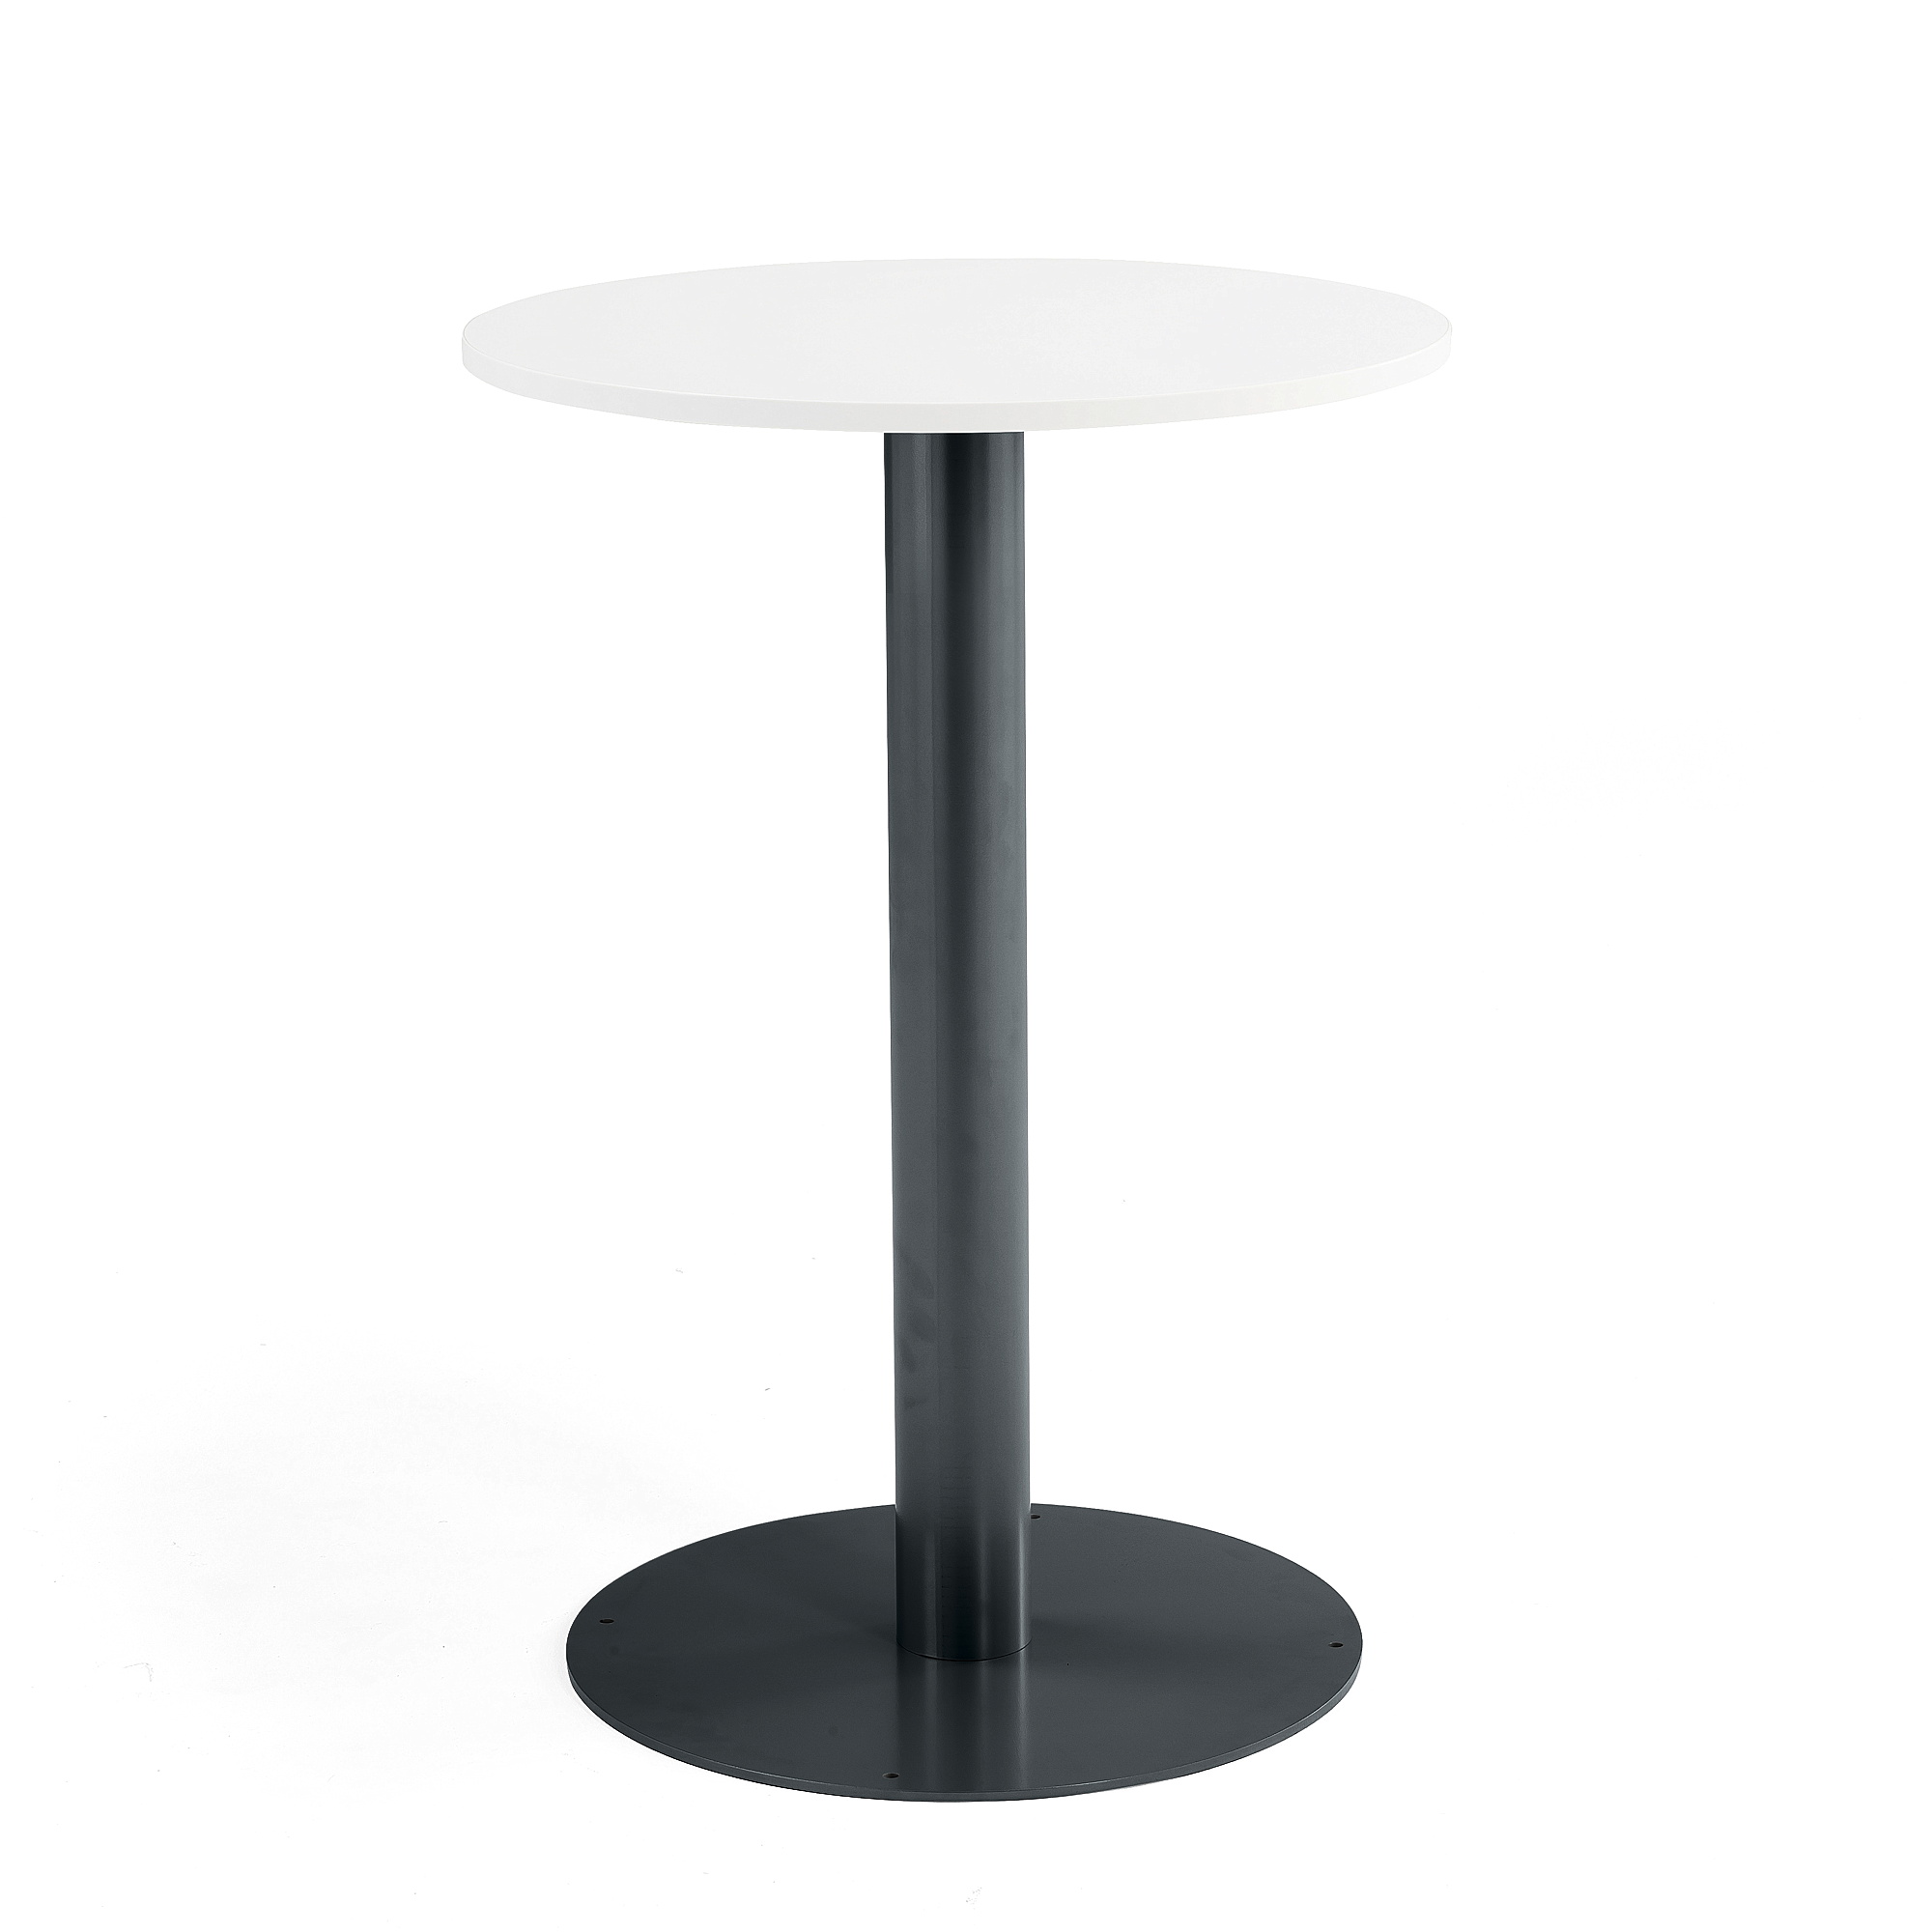 Kulatý stůl Alva, Ø700x1000 mm, bílá, antracitově šedá